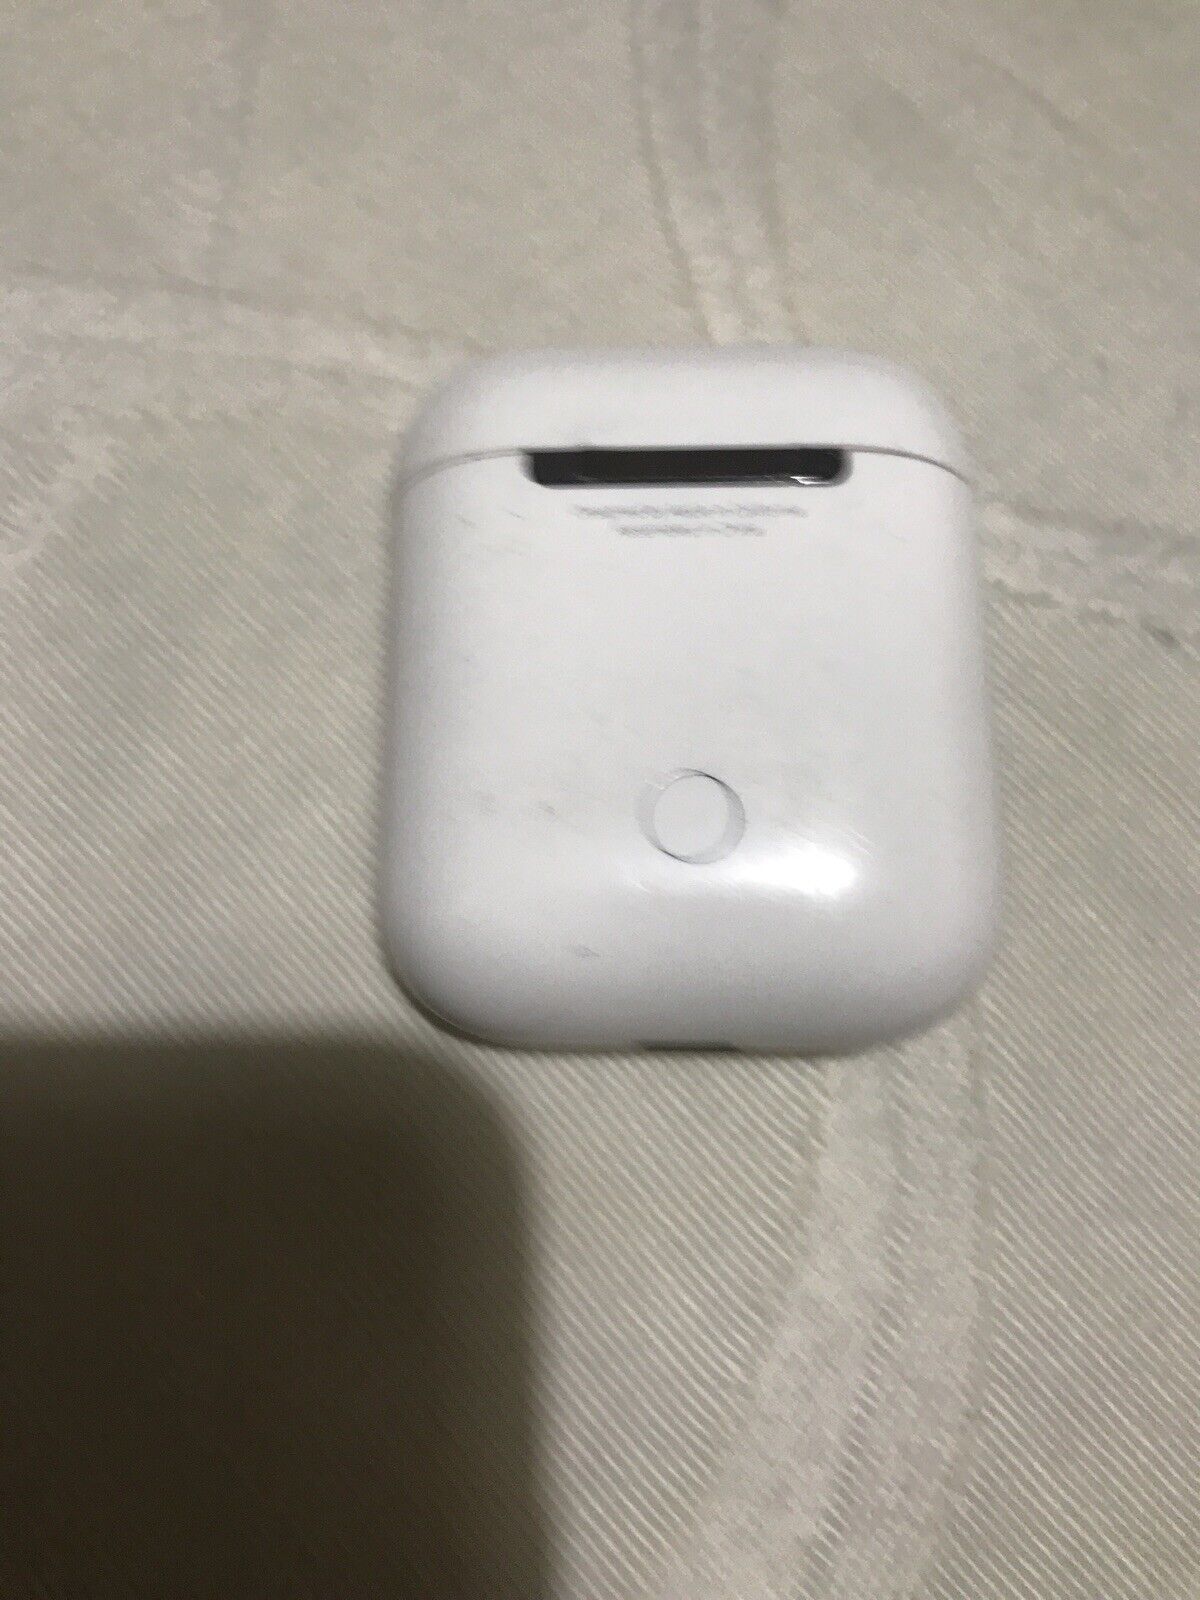 Apple AirPods (1st Generation) Wireless Headphones - White